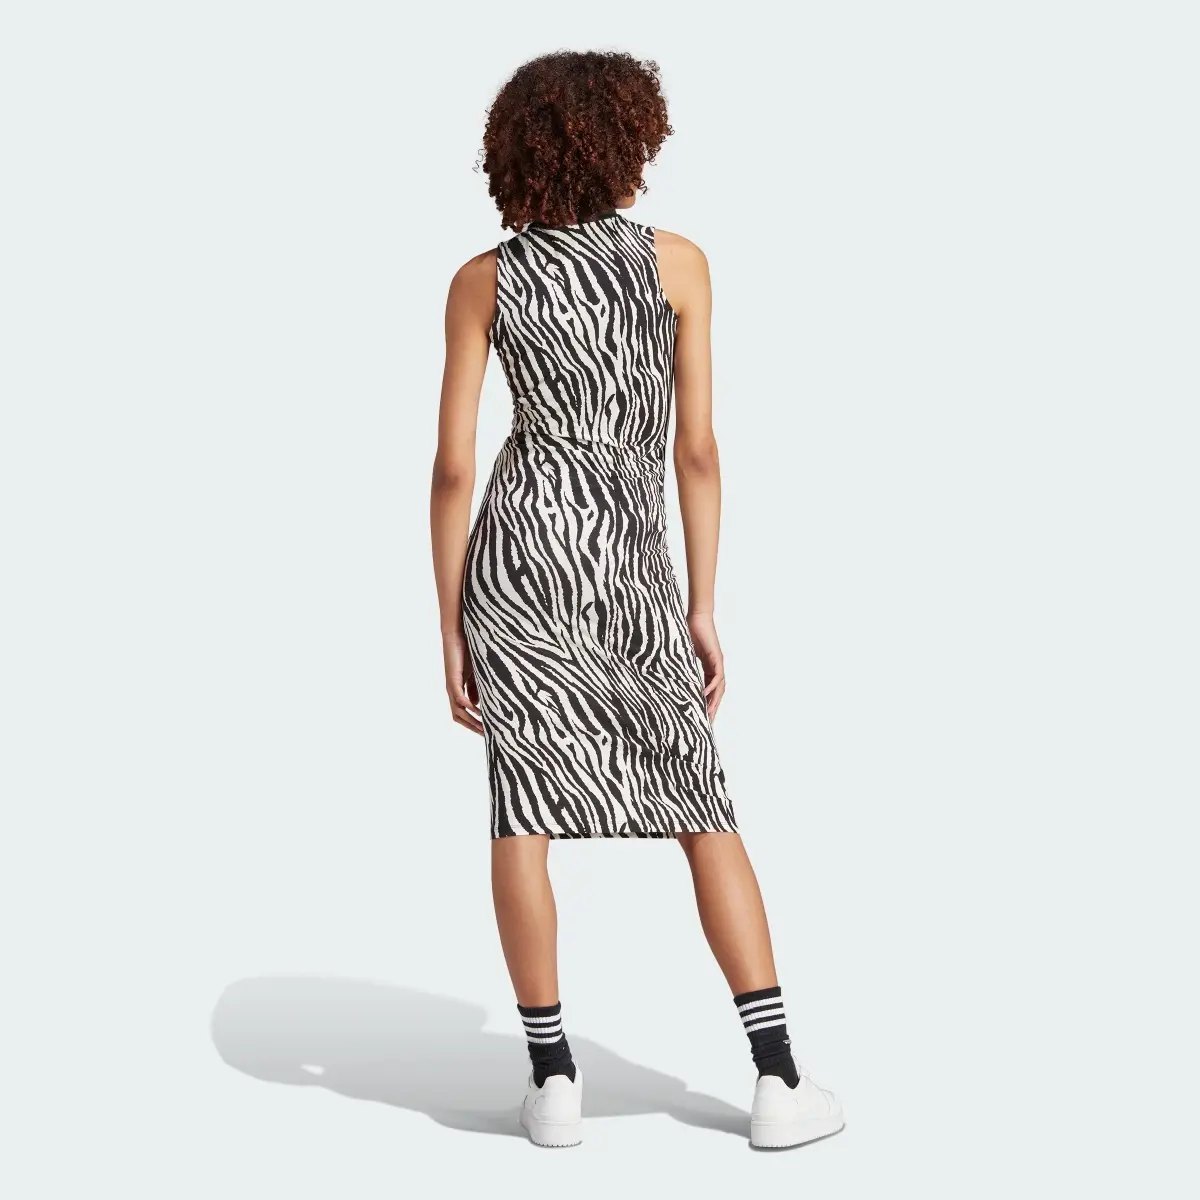 Adidas Sukienka Allover Zebra Animal Print. 3